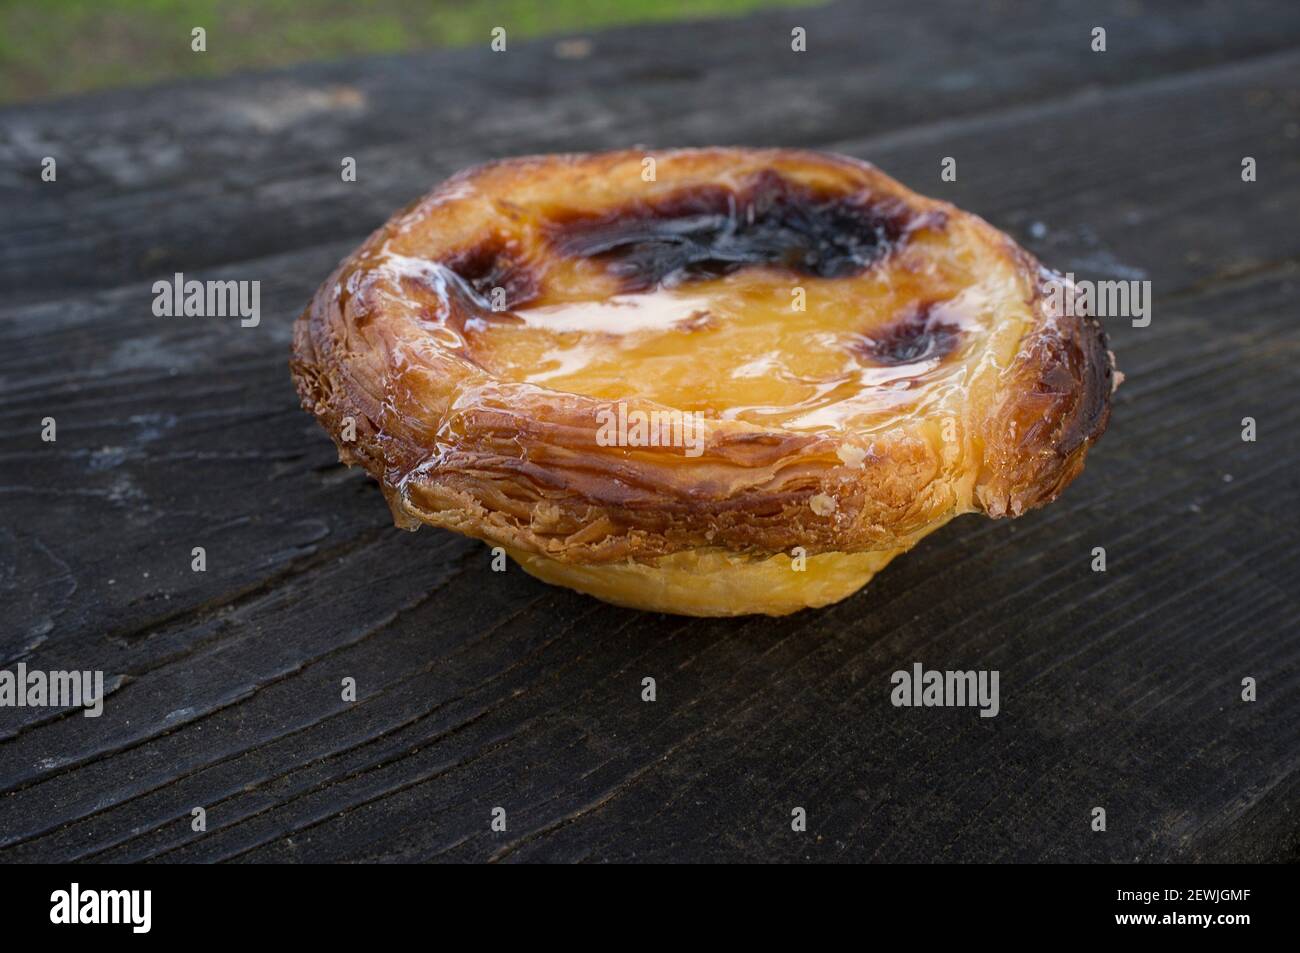 Portuguese egg custard pastry or Pasteis de nata over dark wooden background. Outdoors shot. Stock Photo